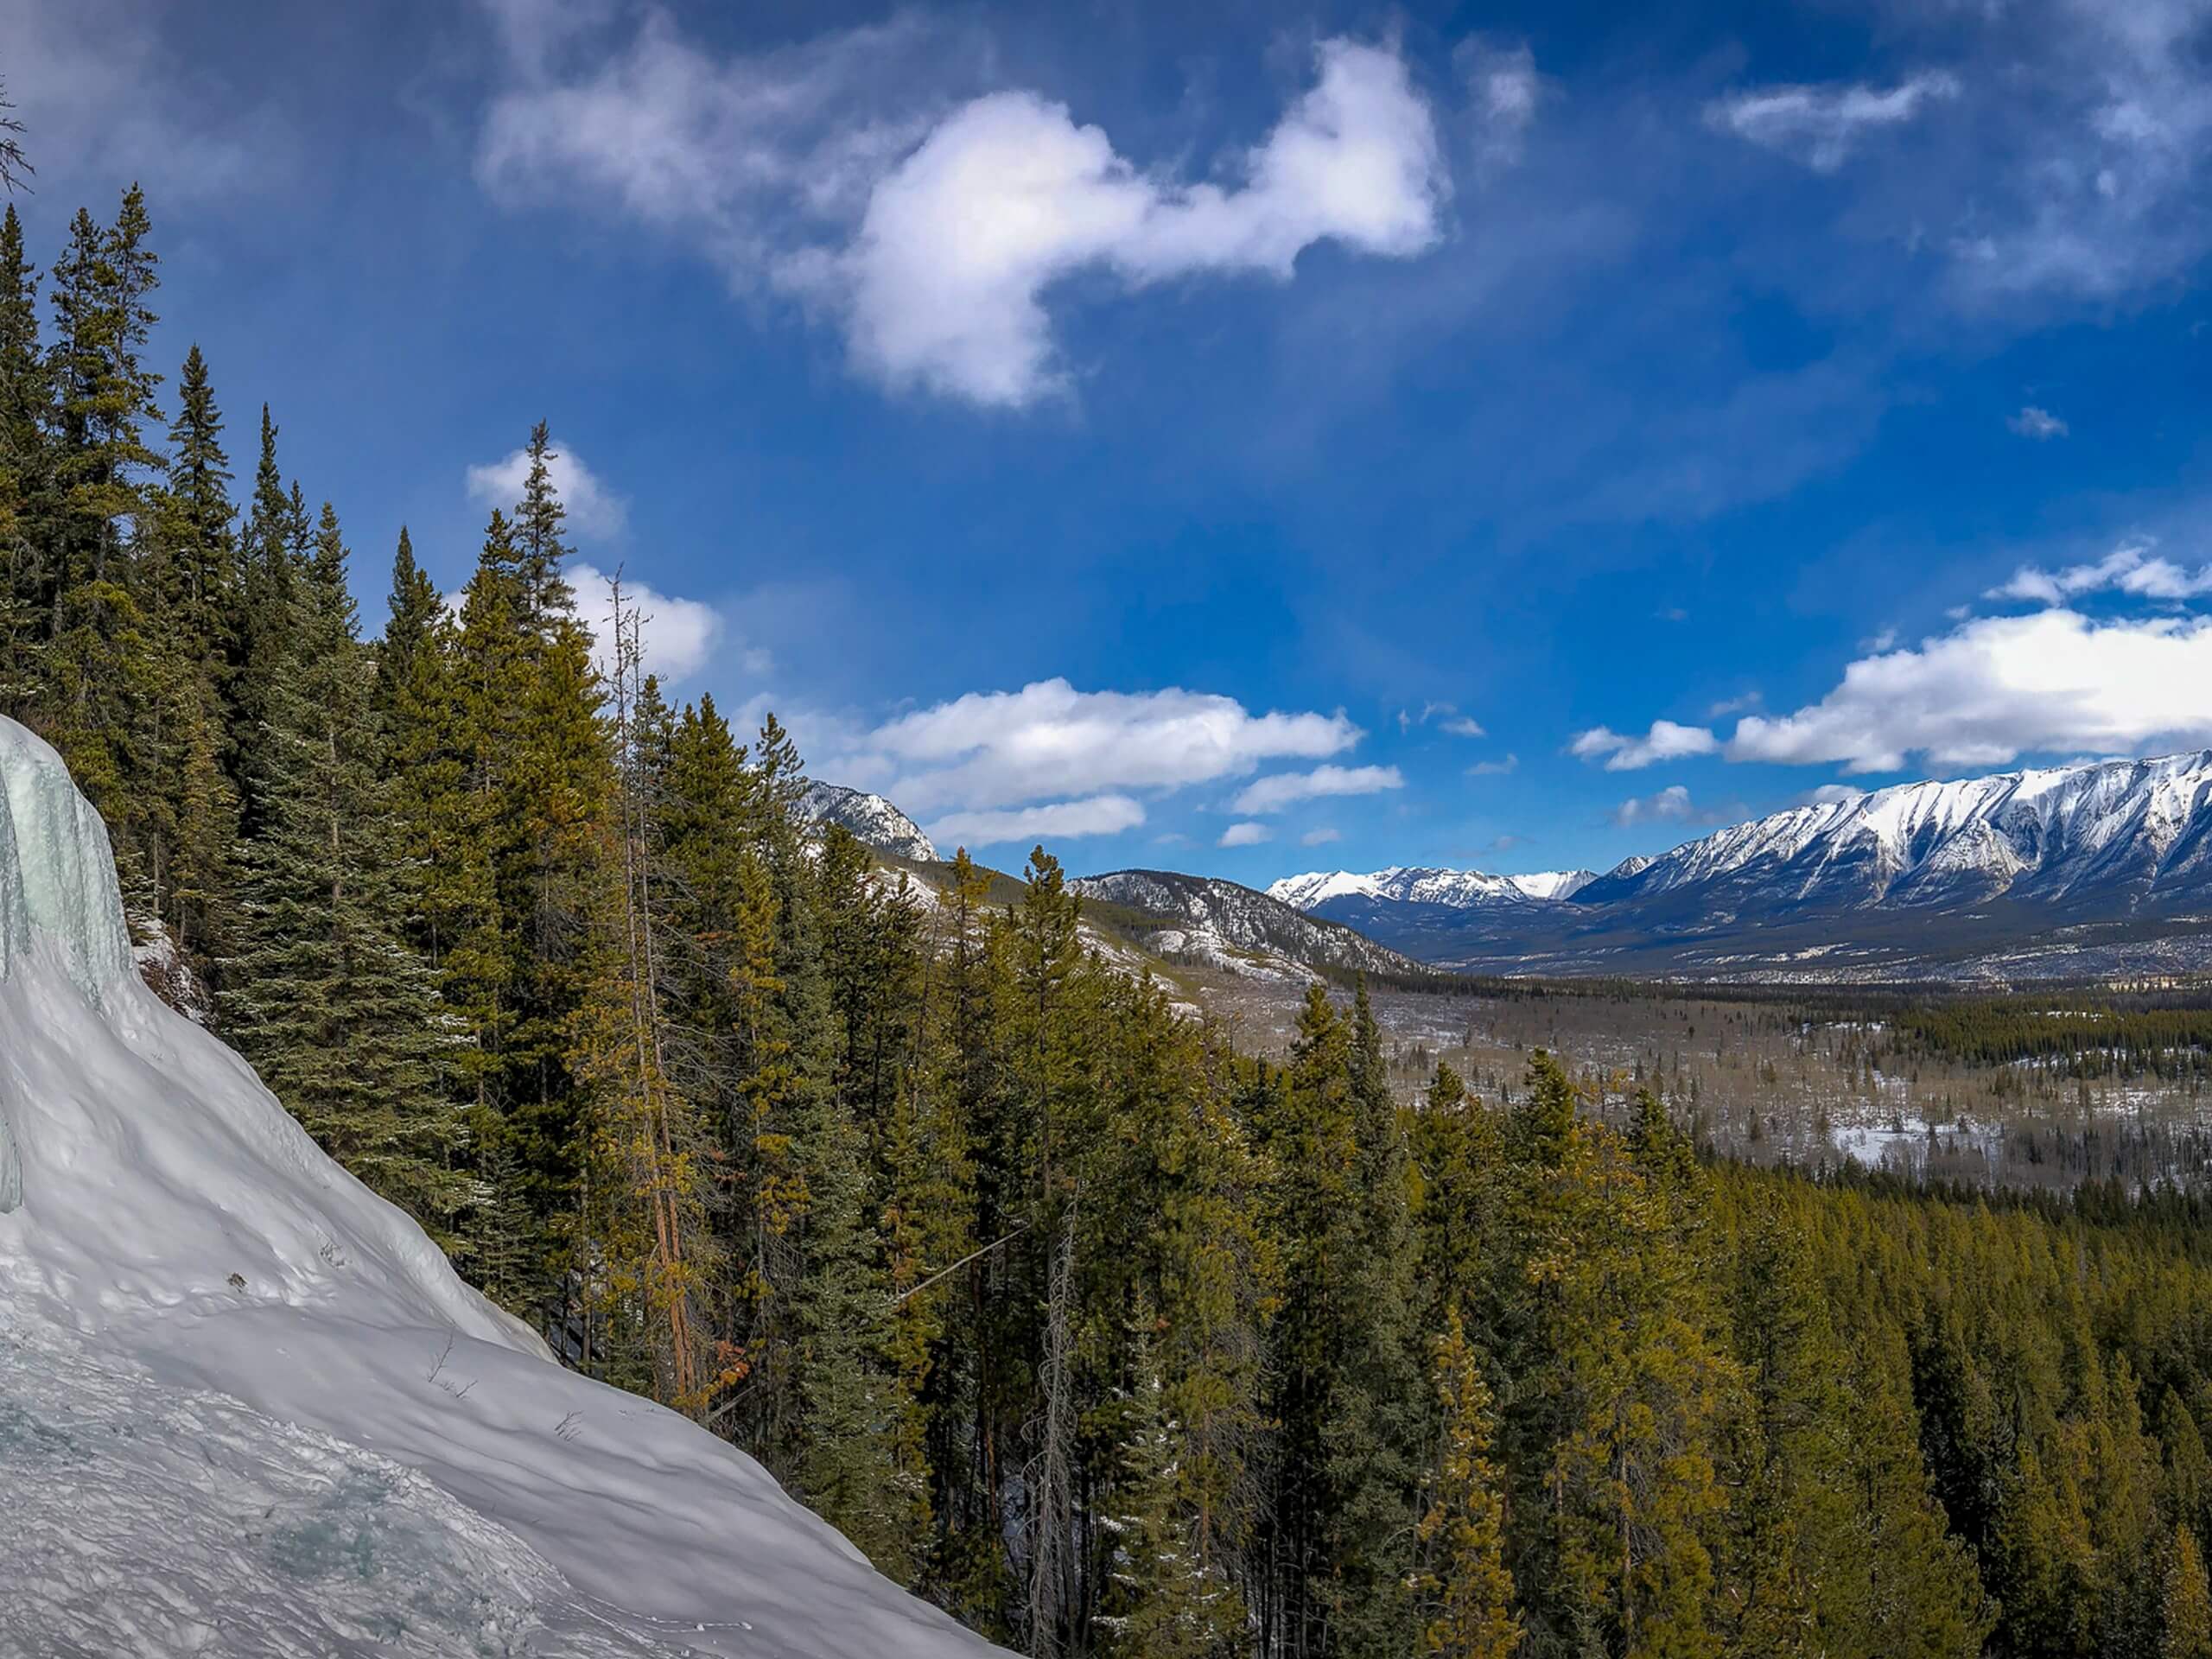 Stunning winter scenery in Banff